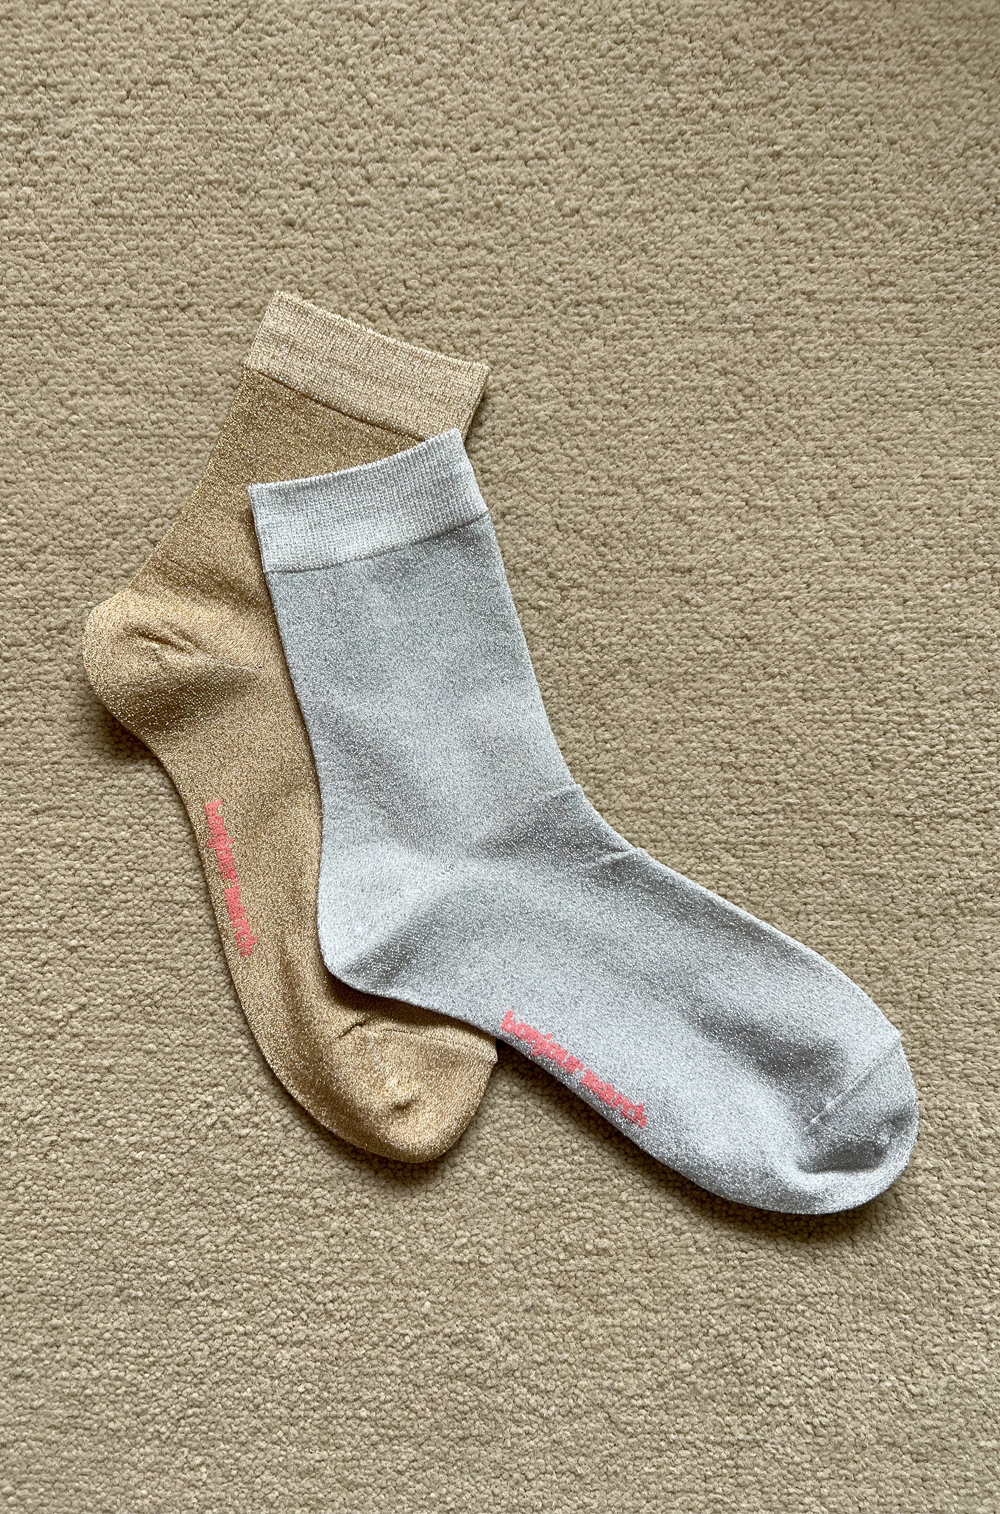 Twinkle socks